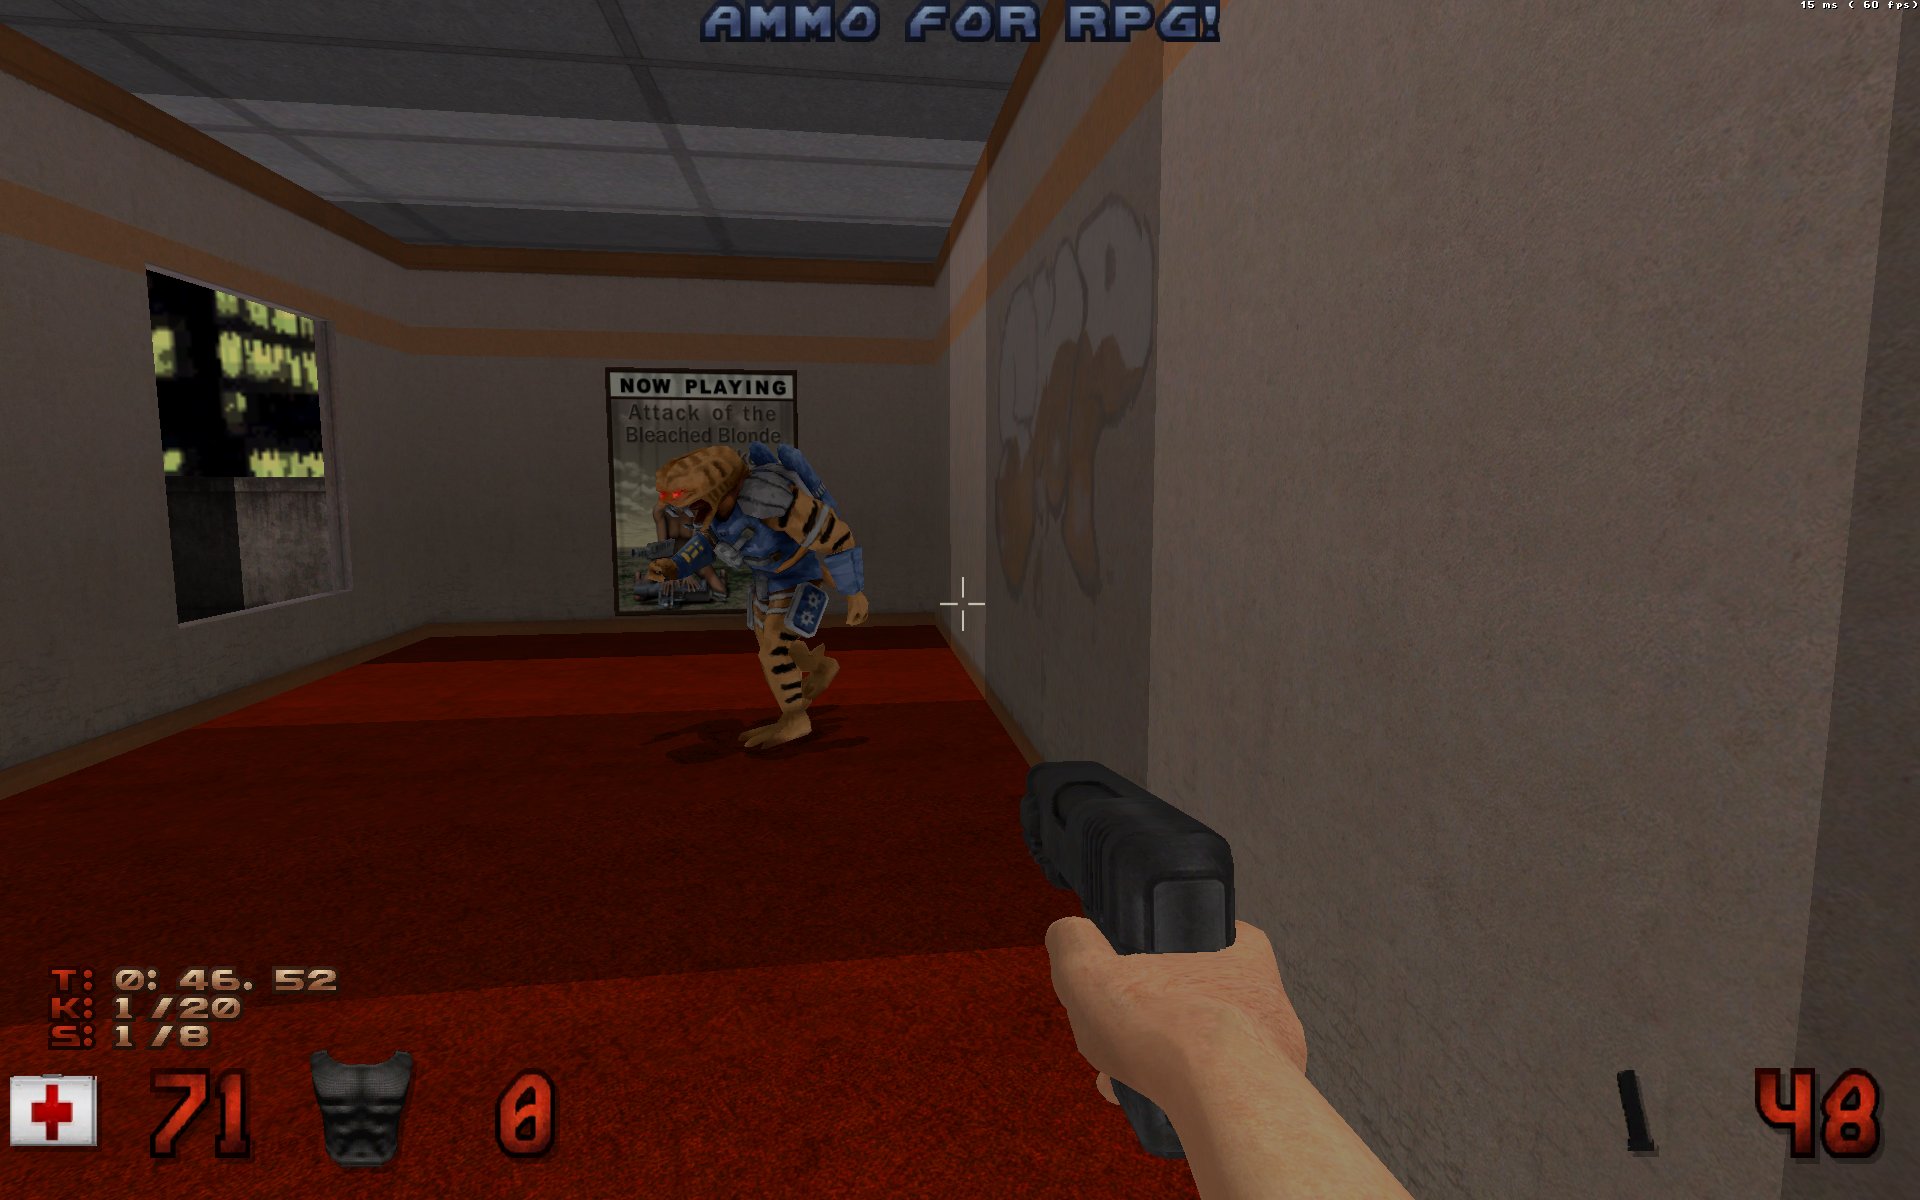 Capture d'écran du jeu via EDuke32.